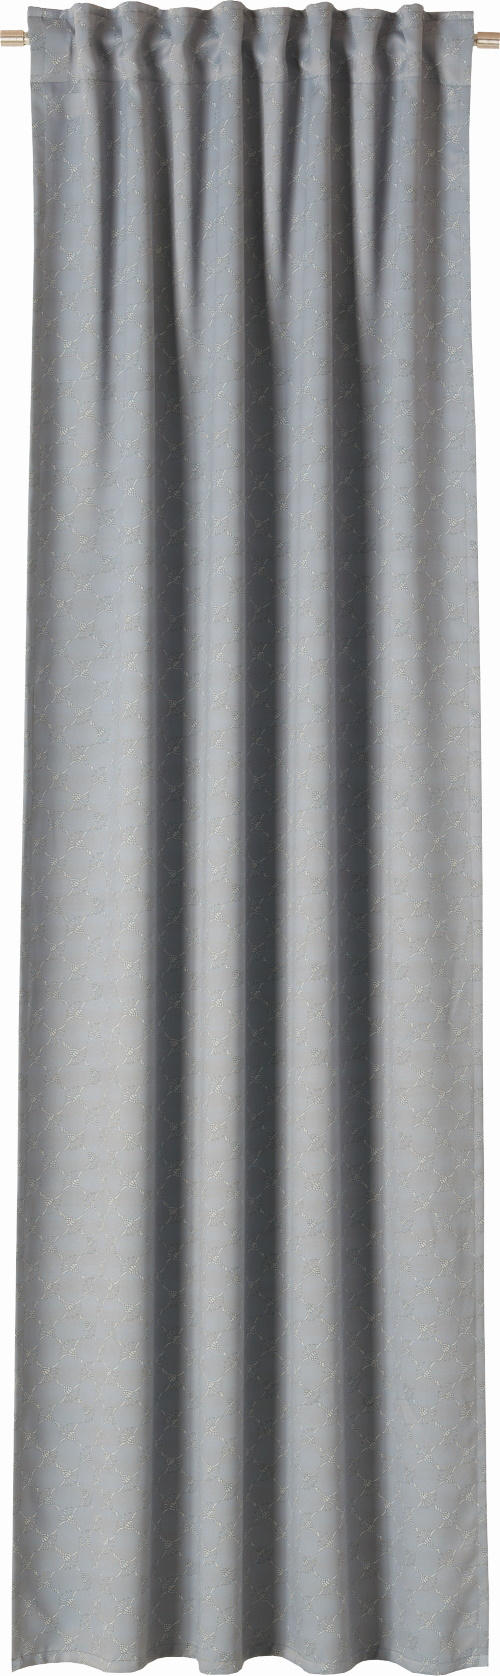 FERTIGVORHANG Shade blickdicht 130/250 cm   - Grau, Design, Textil (130/250cm) - Joop!